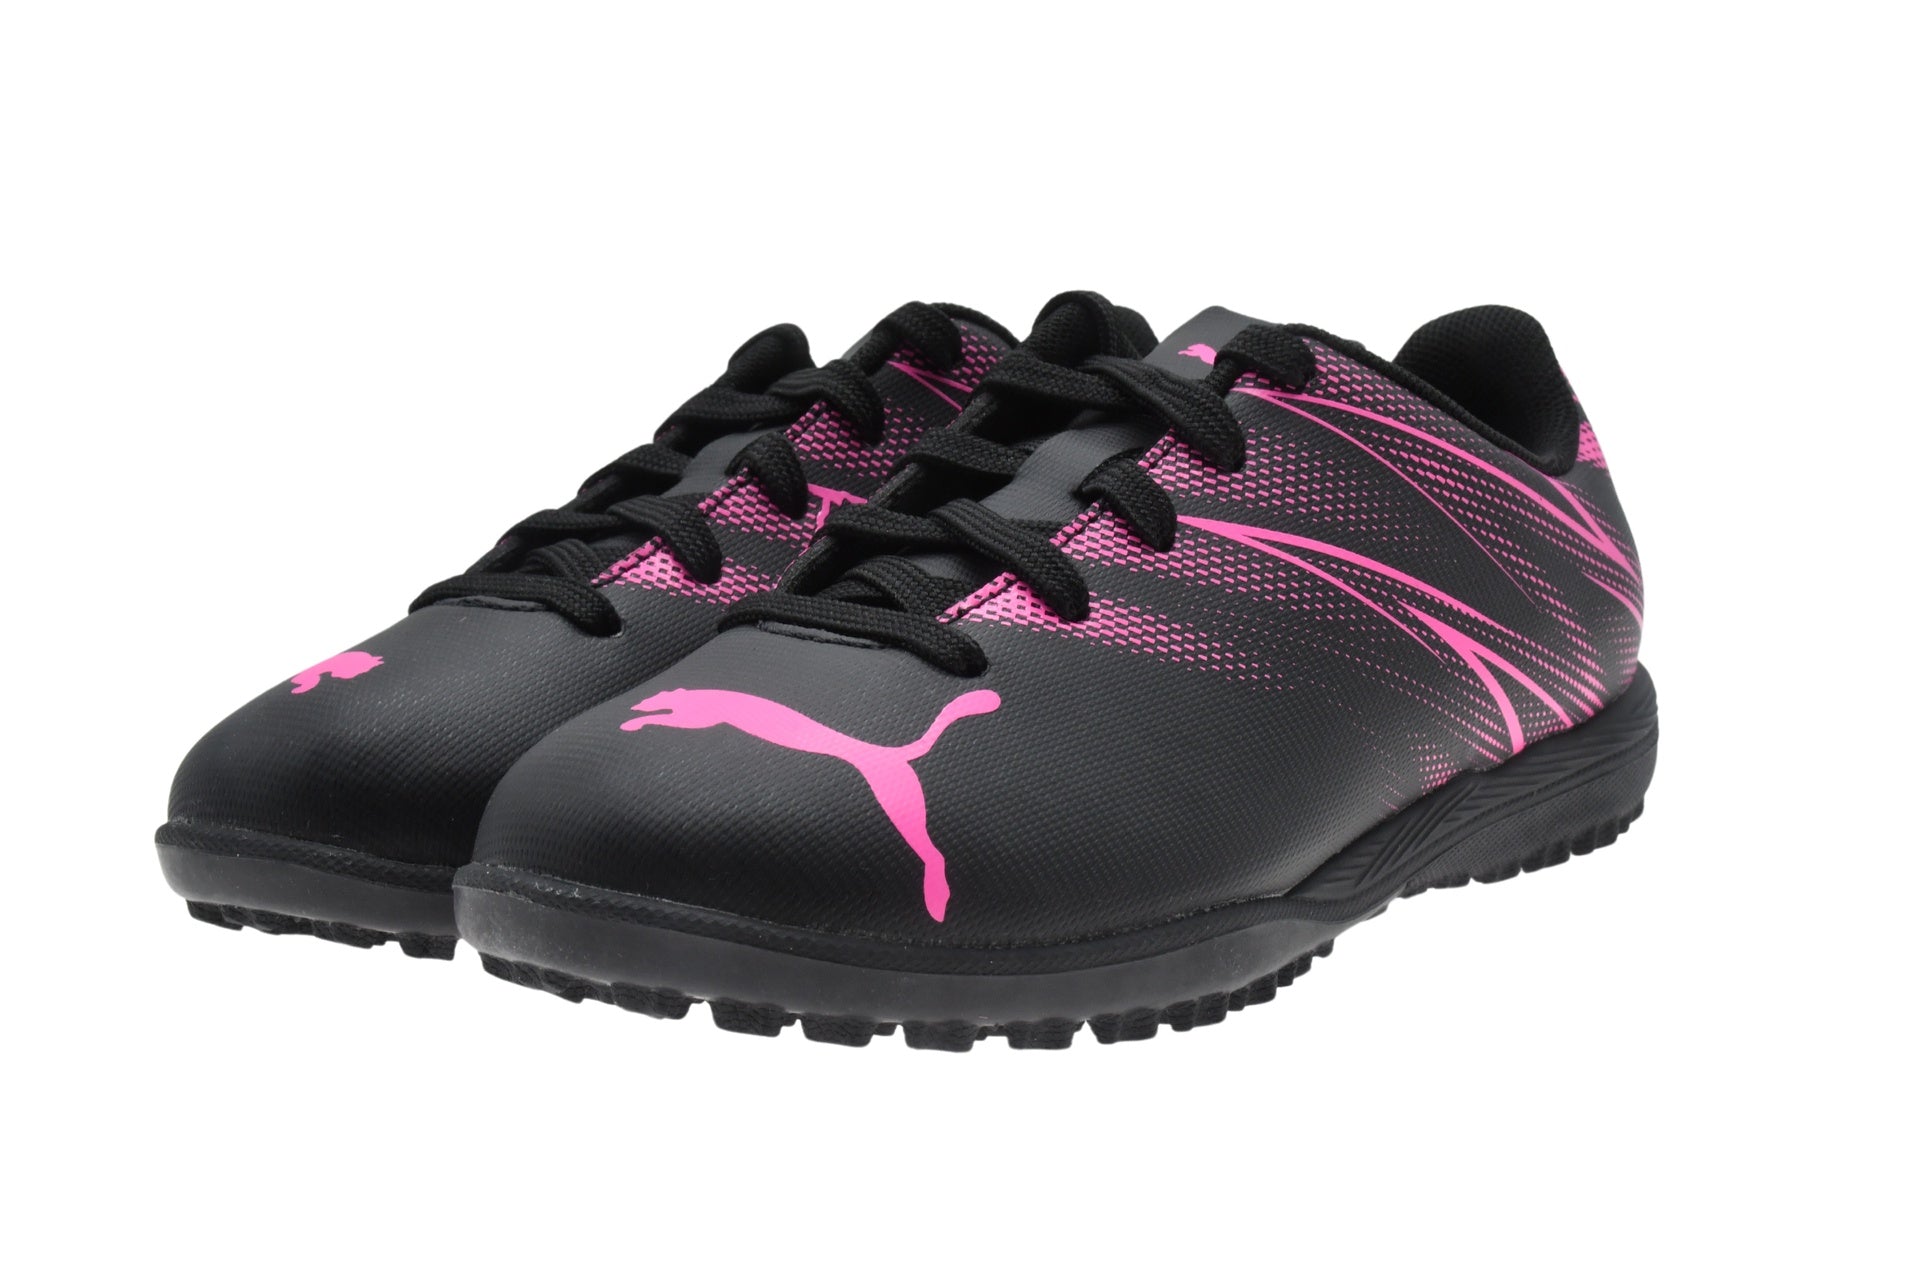 Puma Attacanto TT Football Boots - 10 - Black/Pink